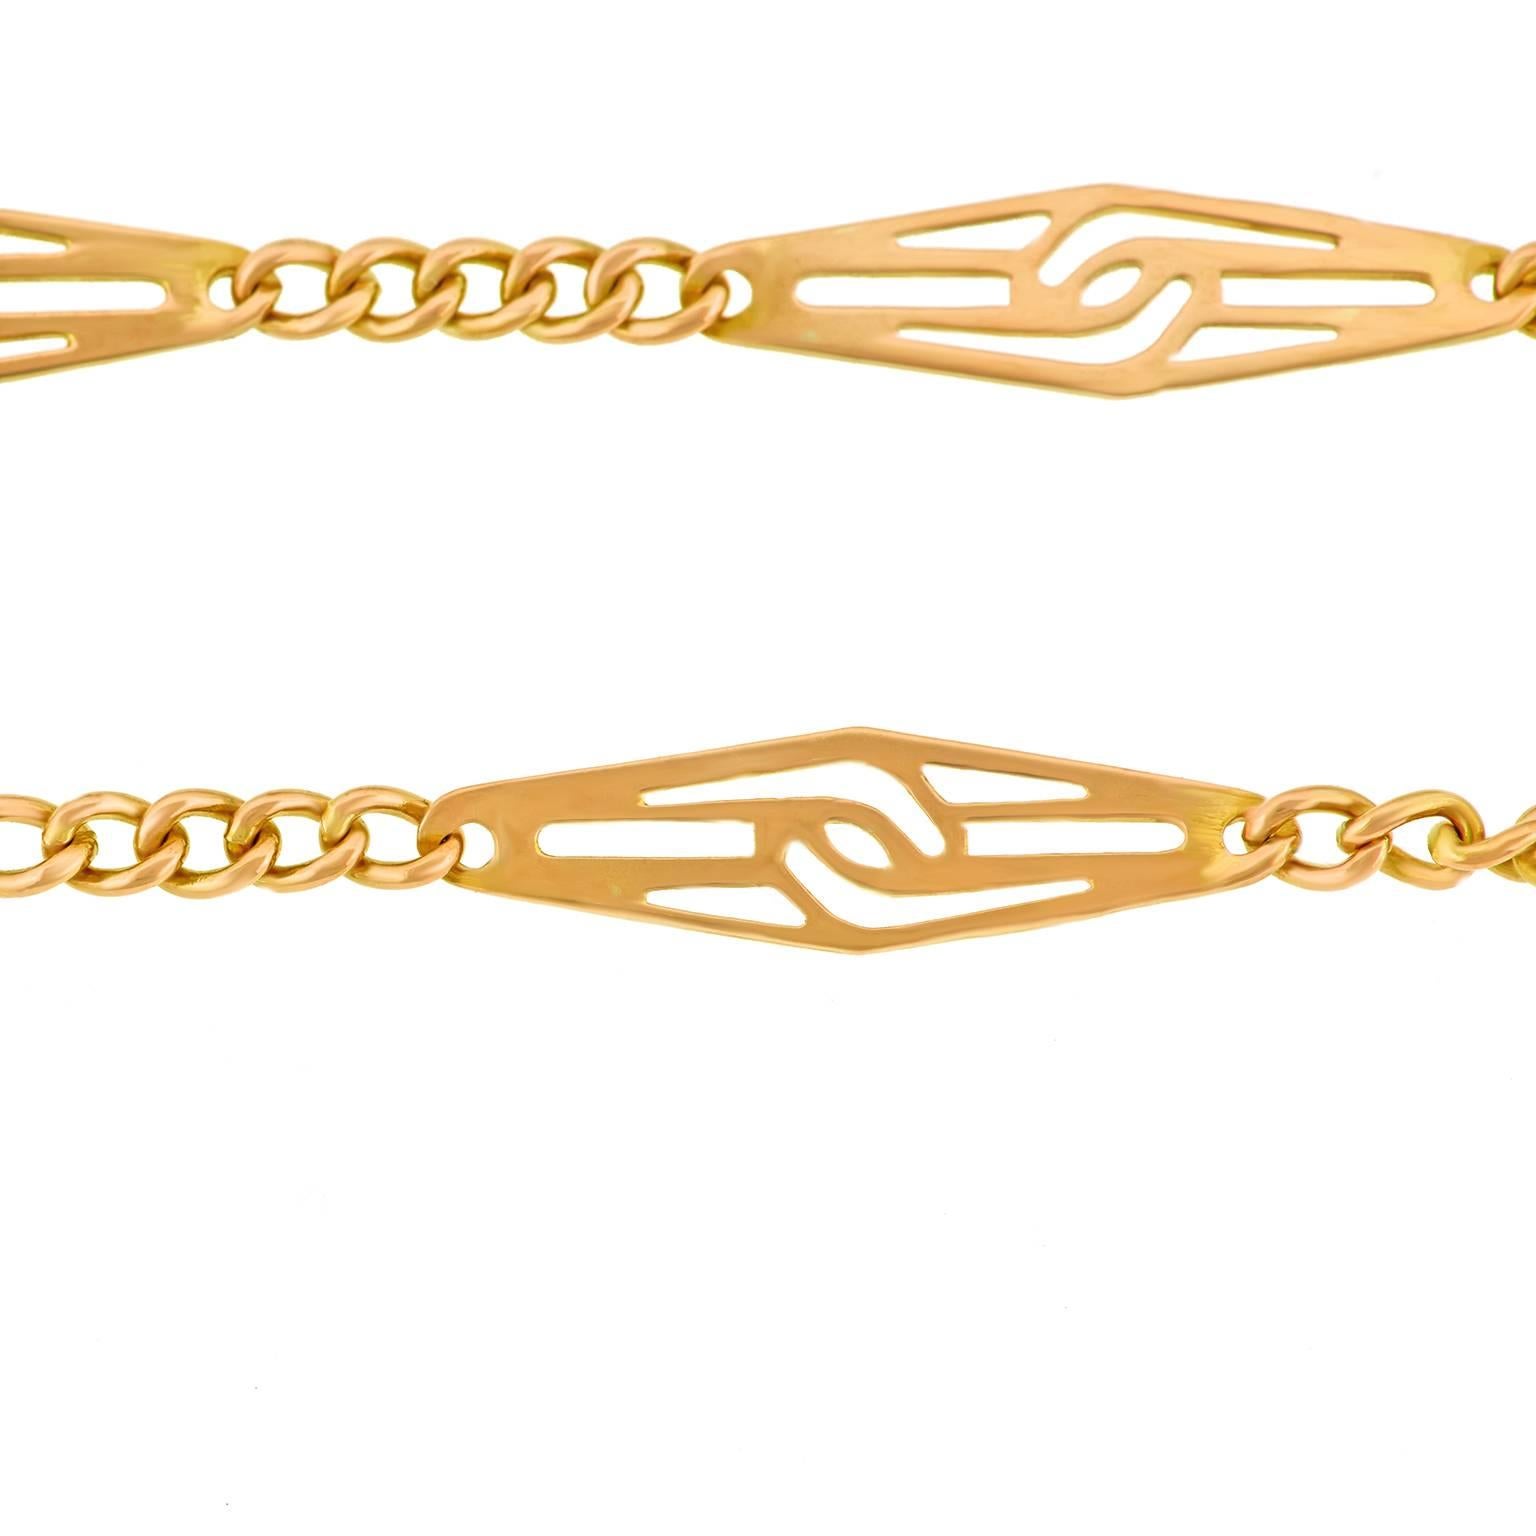 1960s Mod Gold Filigree Necklace 1